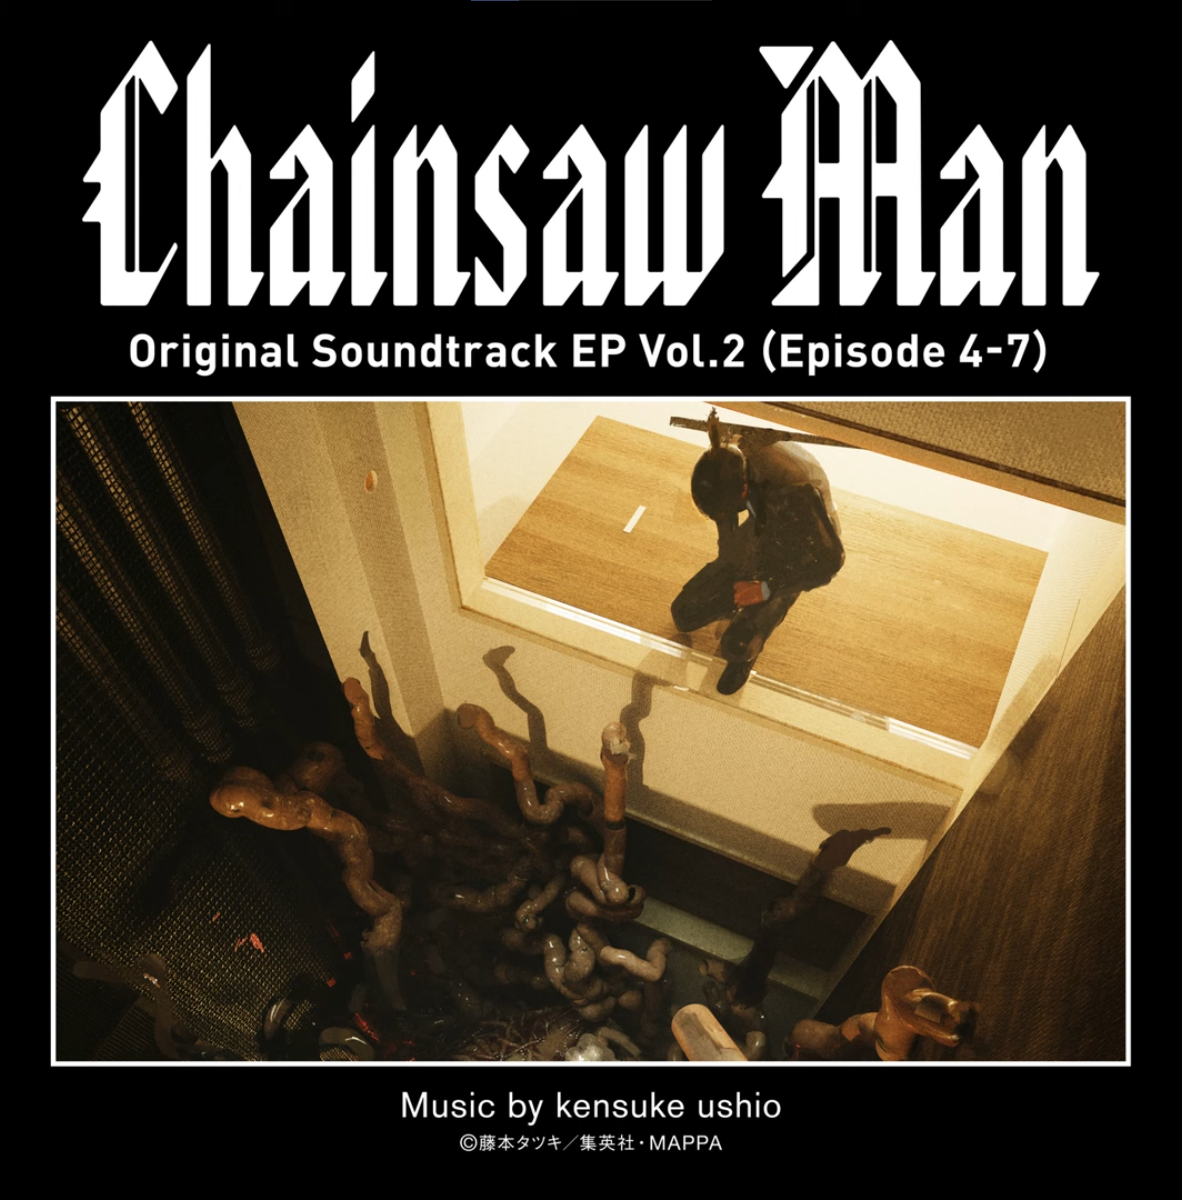 Chainsaw Man Original Sound Track E.P Vol.2 | Chainsaw Man Wiki 